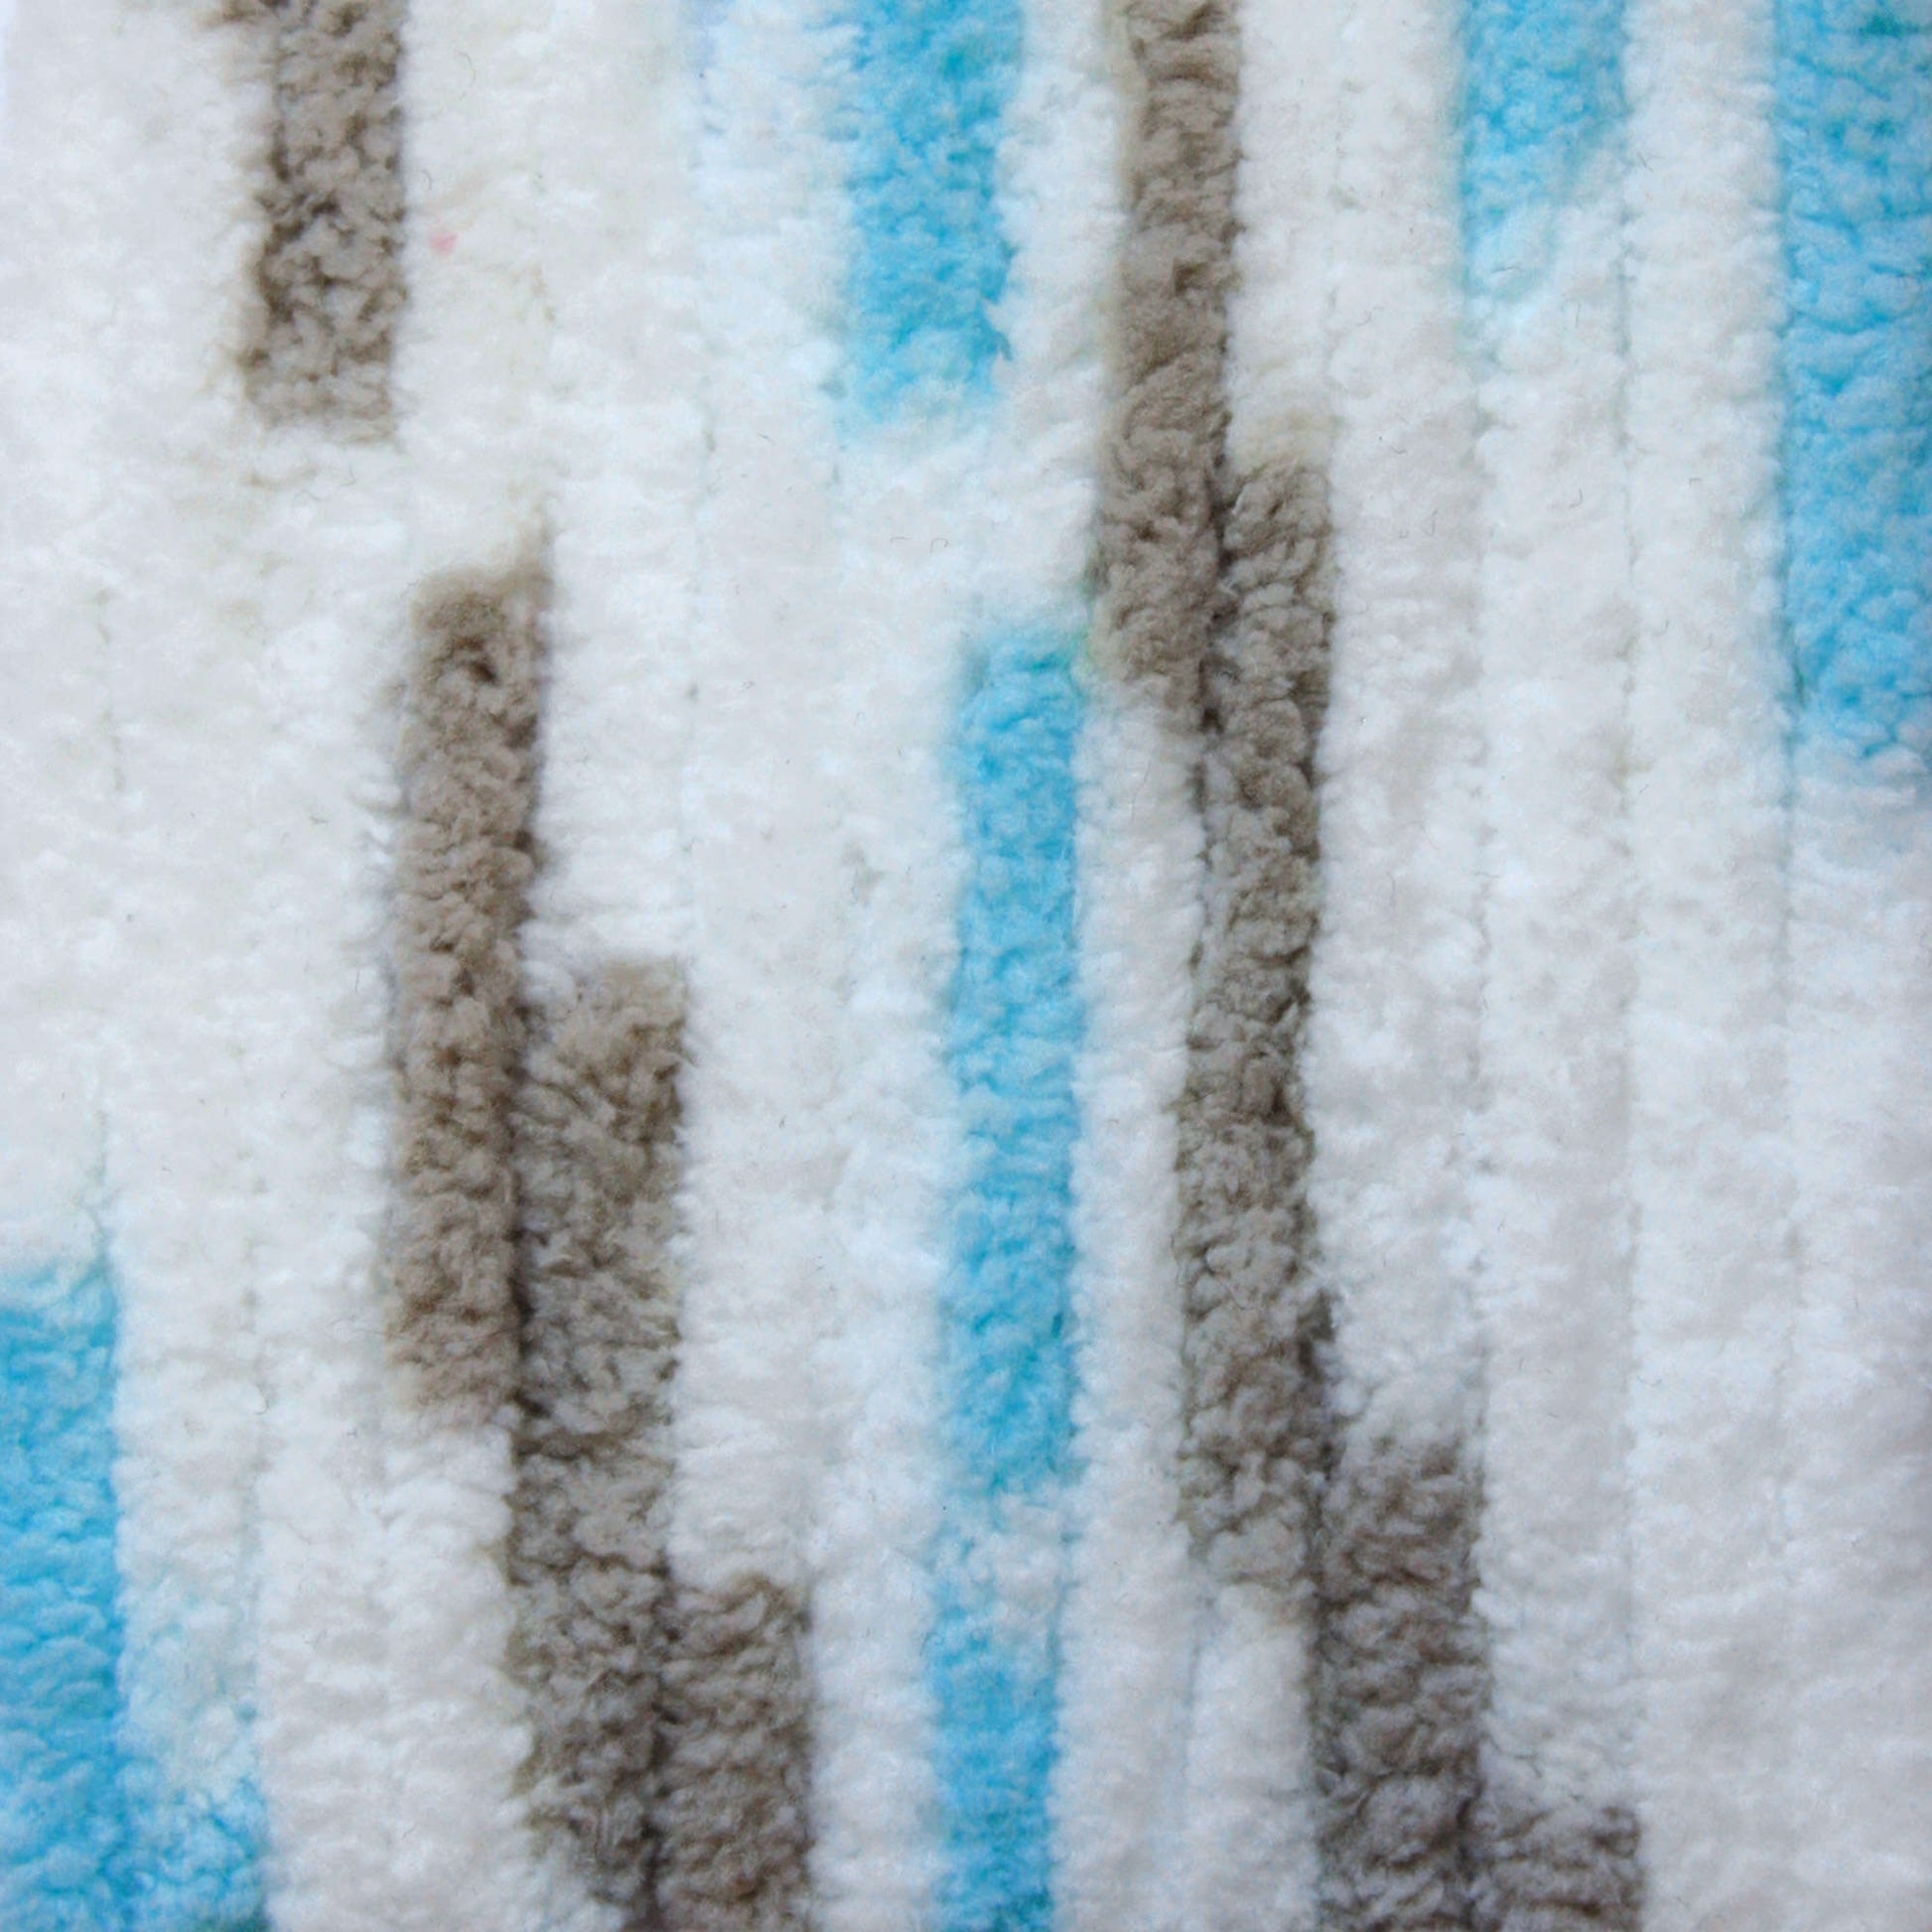 Bernat Baby Blanket Yarn 100g – Pink / Blue Ombre – Yarns by Macpherson